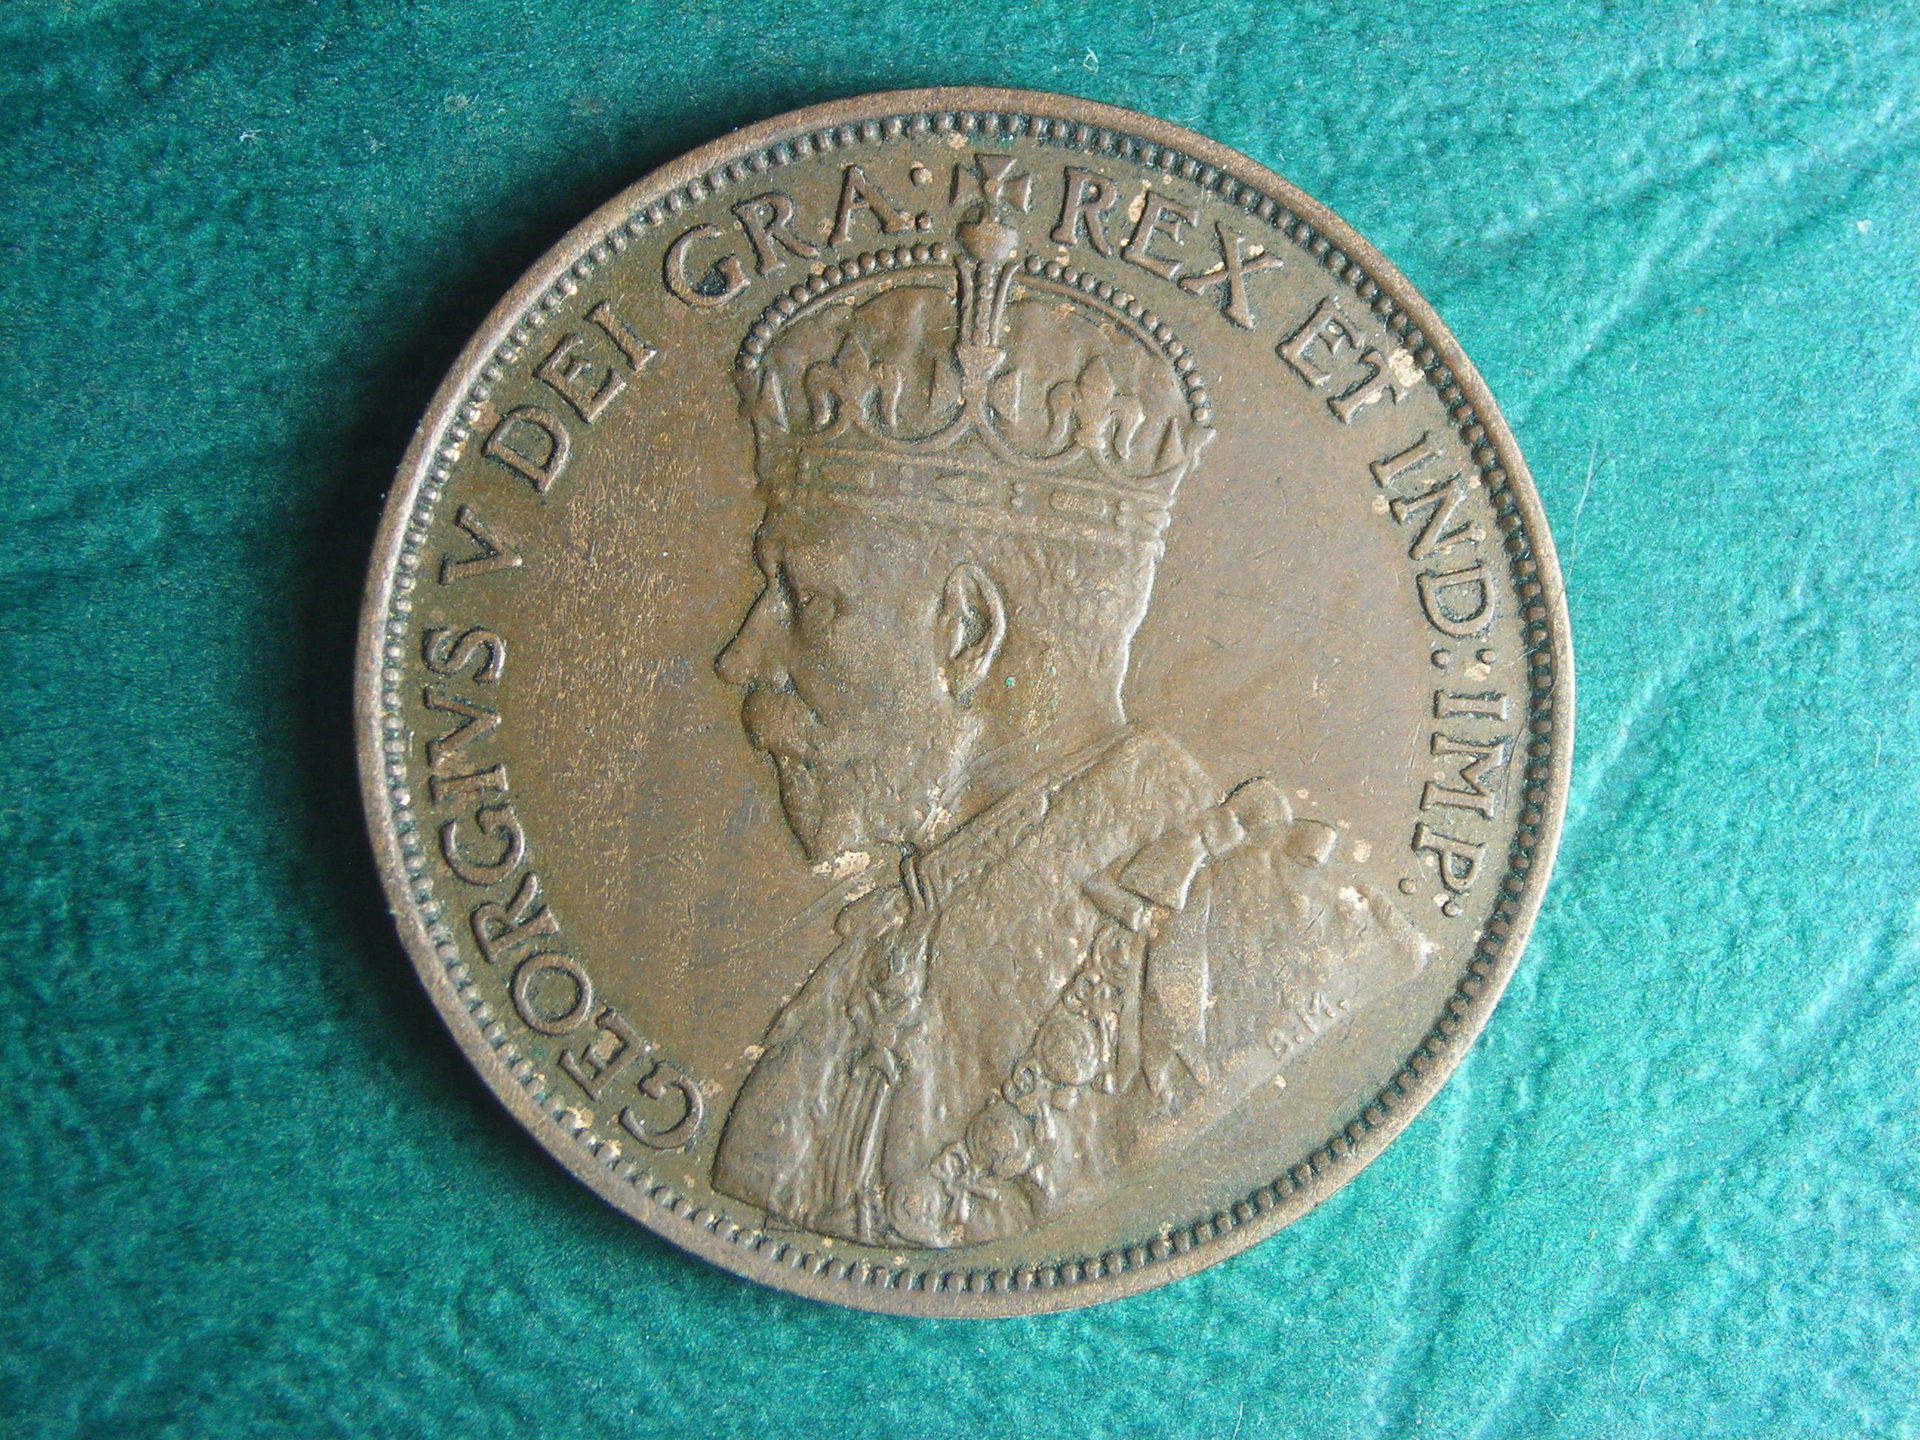 1912 Canada 1 c obv.JPG